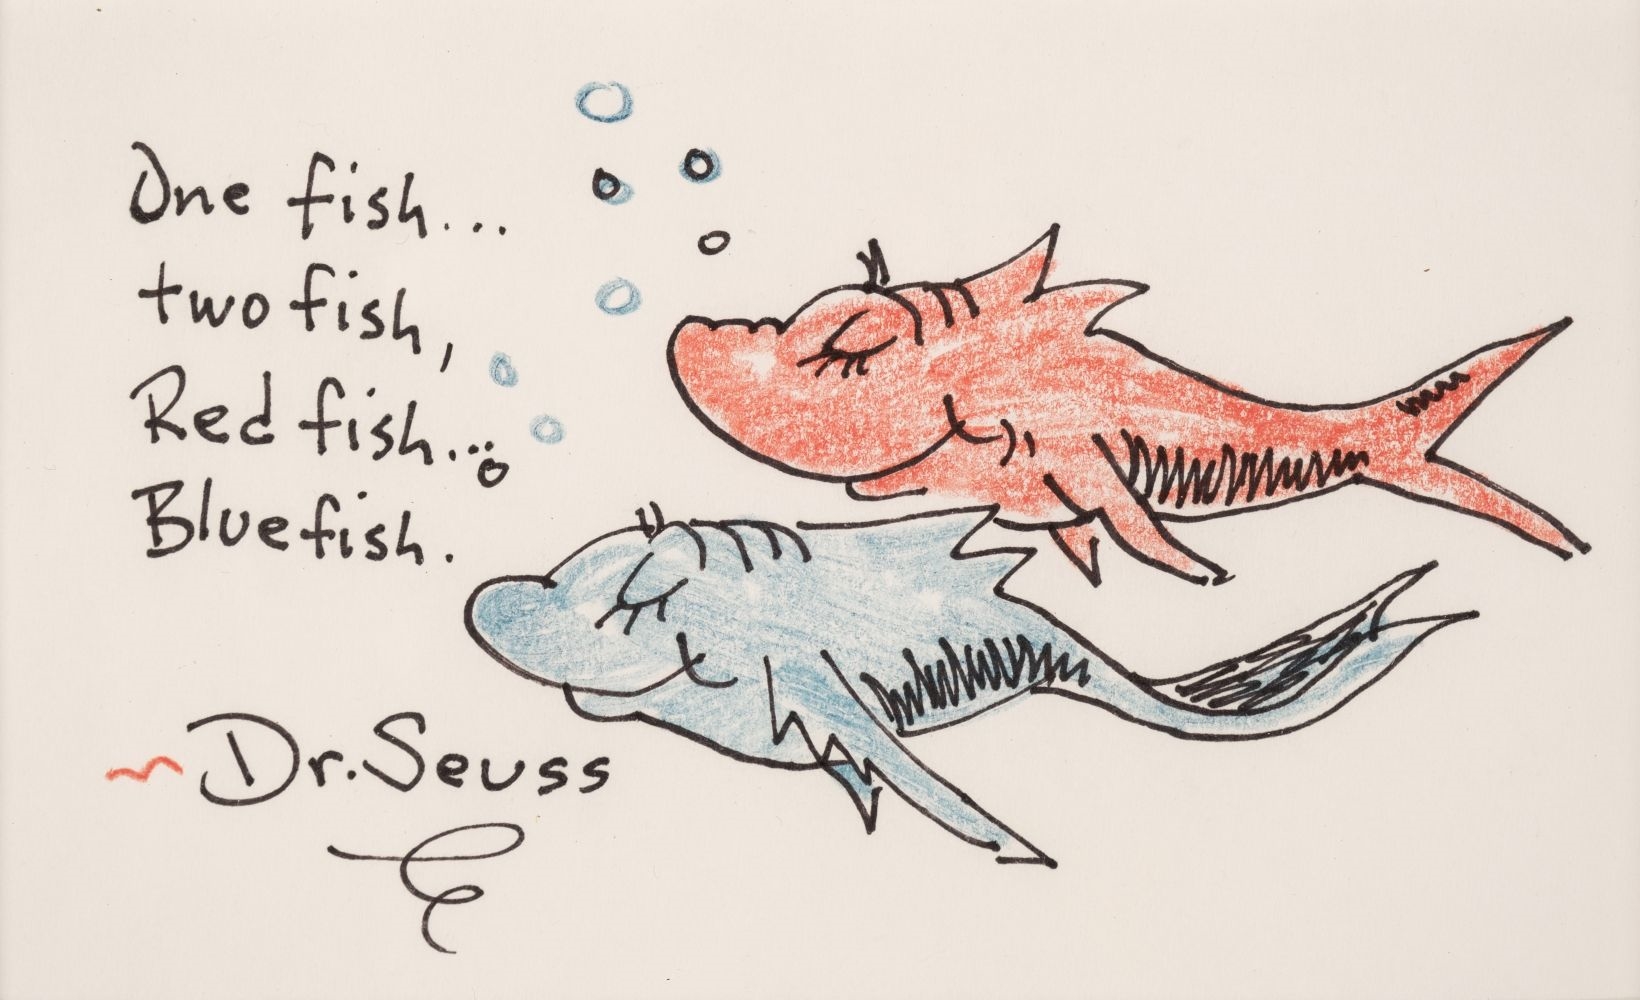 Dr. Seuss, One fishtwo fish, Red fish, Blue fish